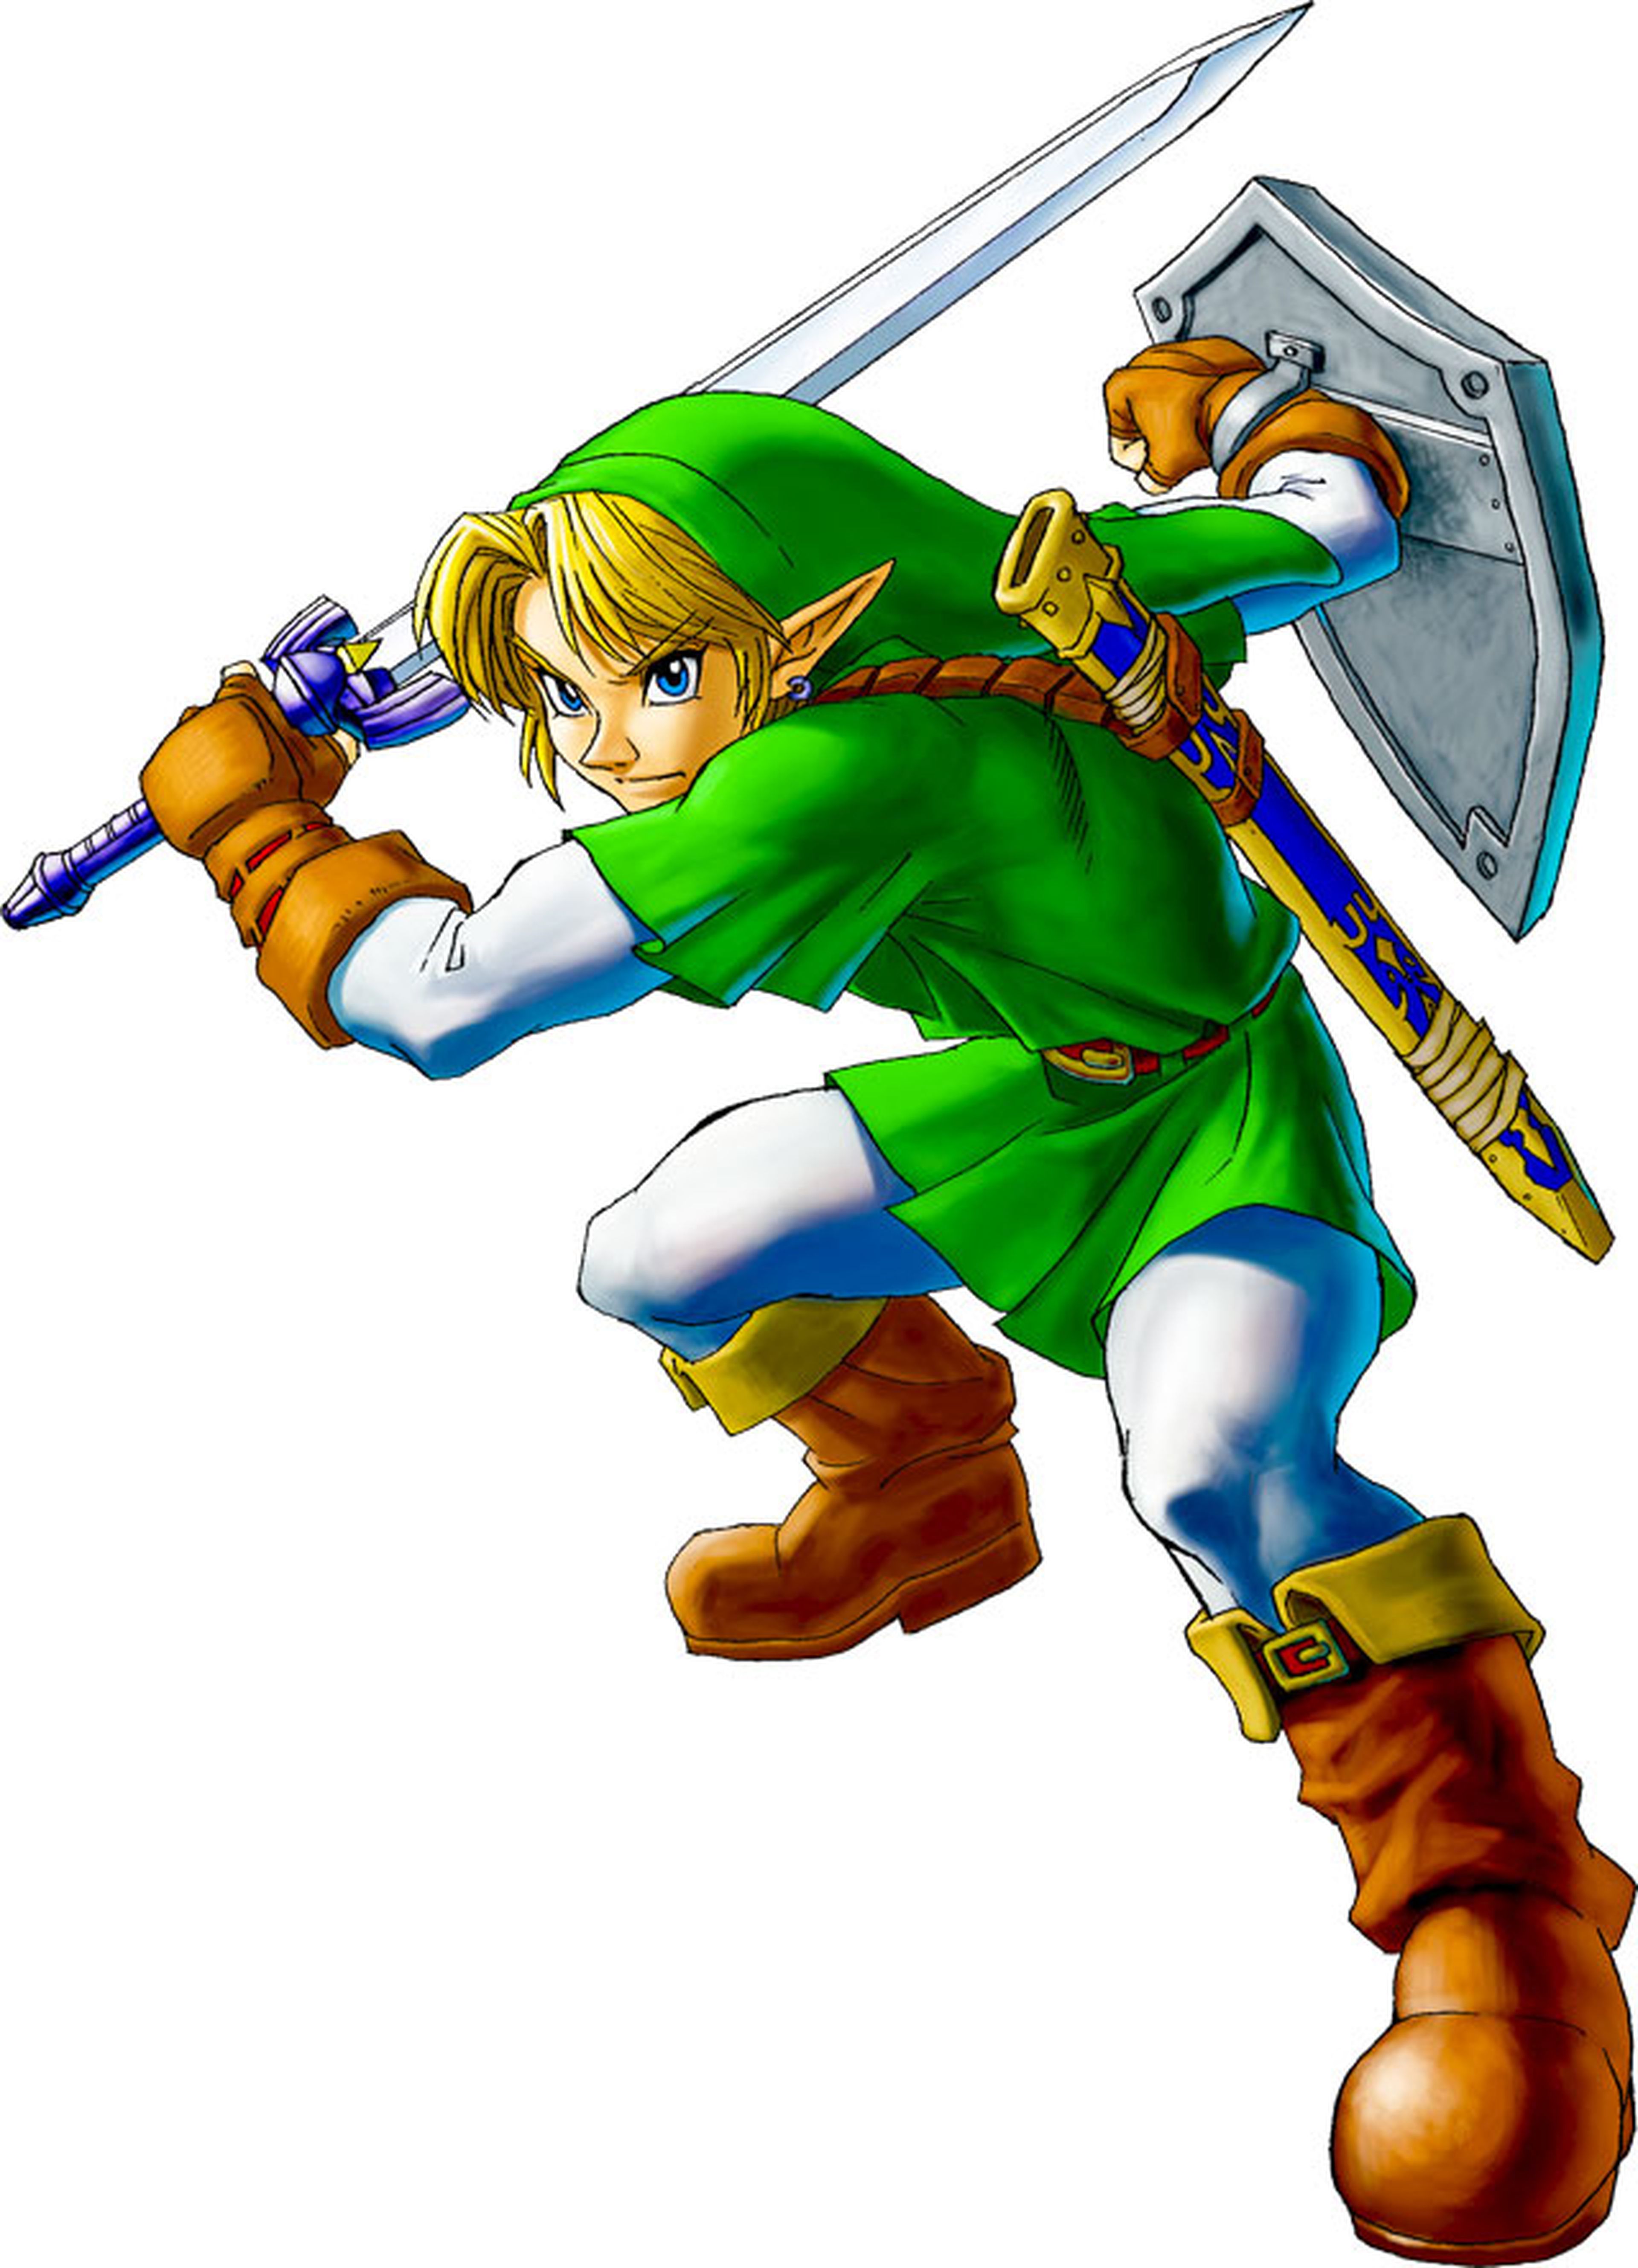 Así era Link antes de Skyward Sword. ¿Notáis algo diferente y Breath of the Wild?